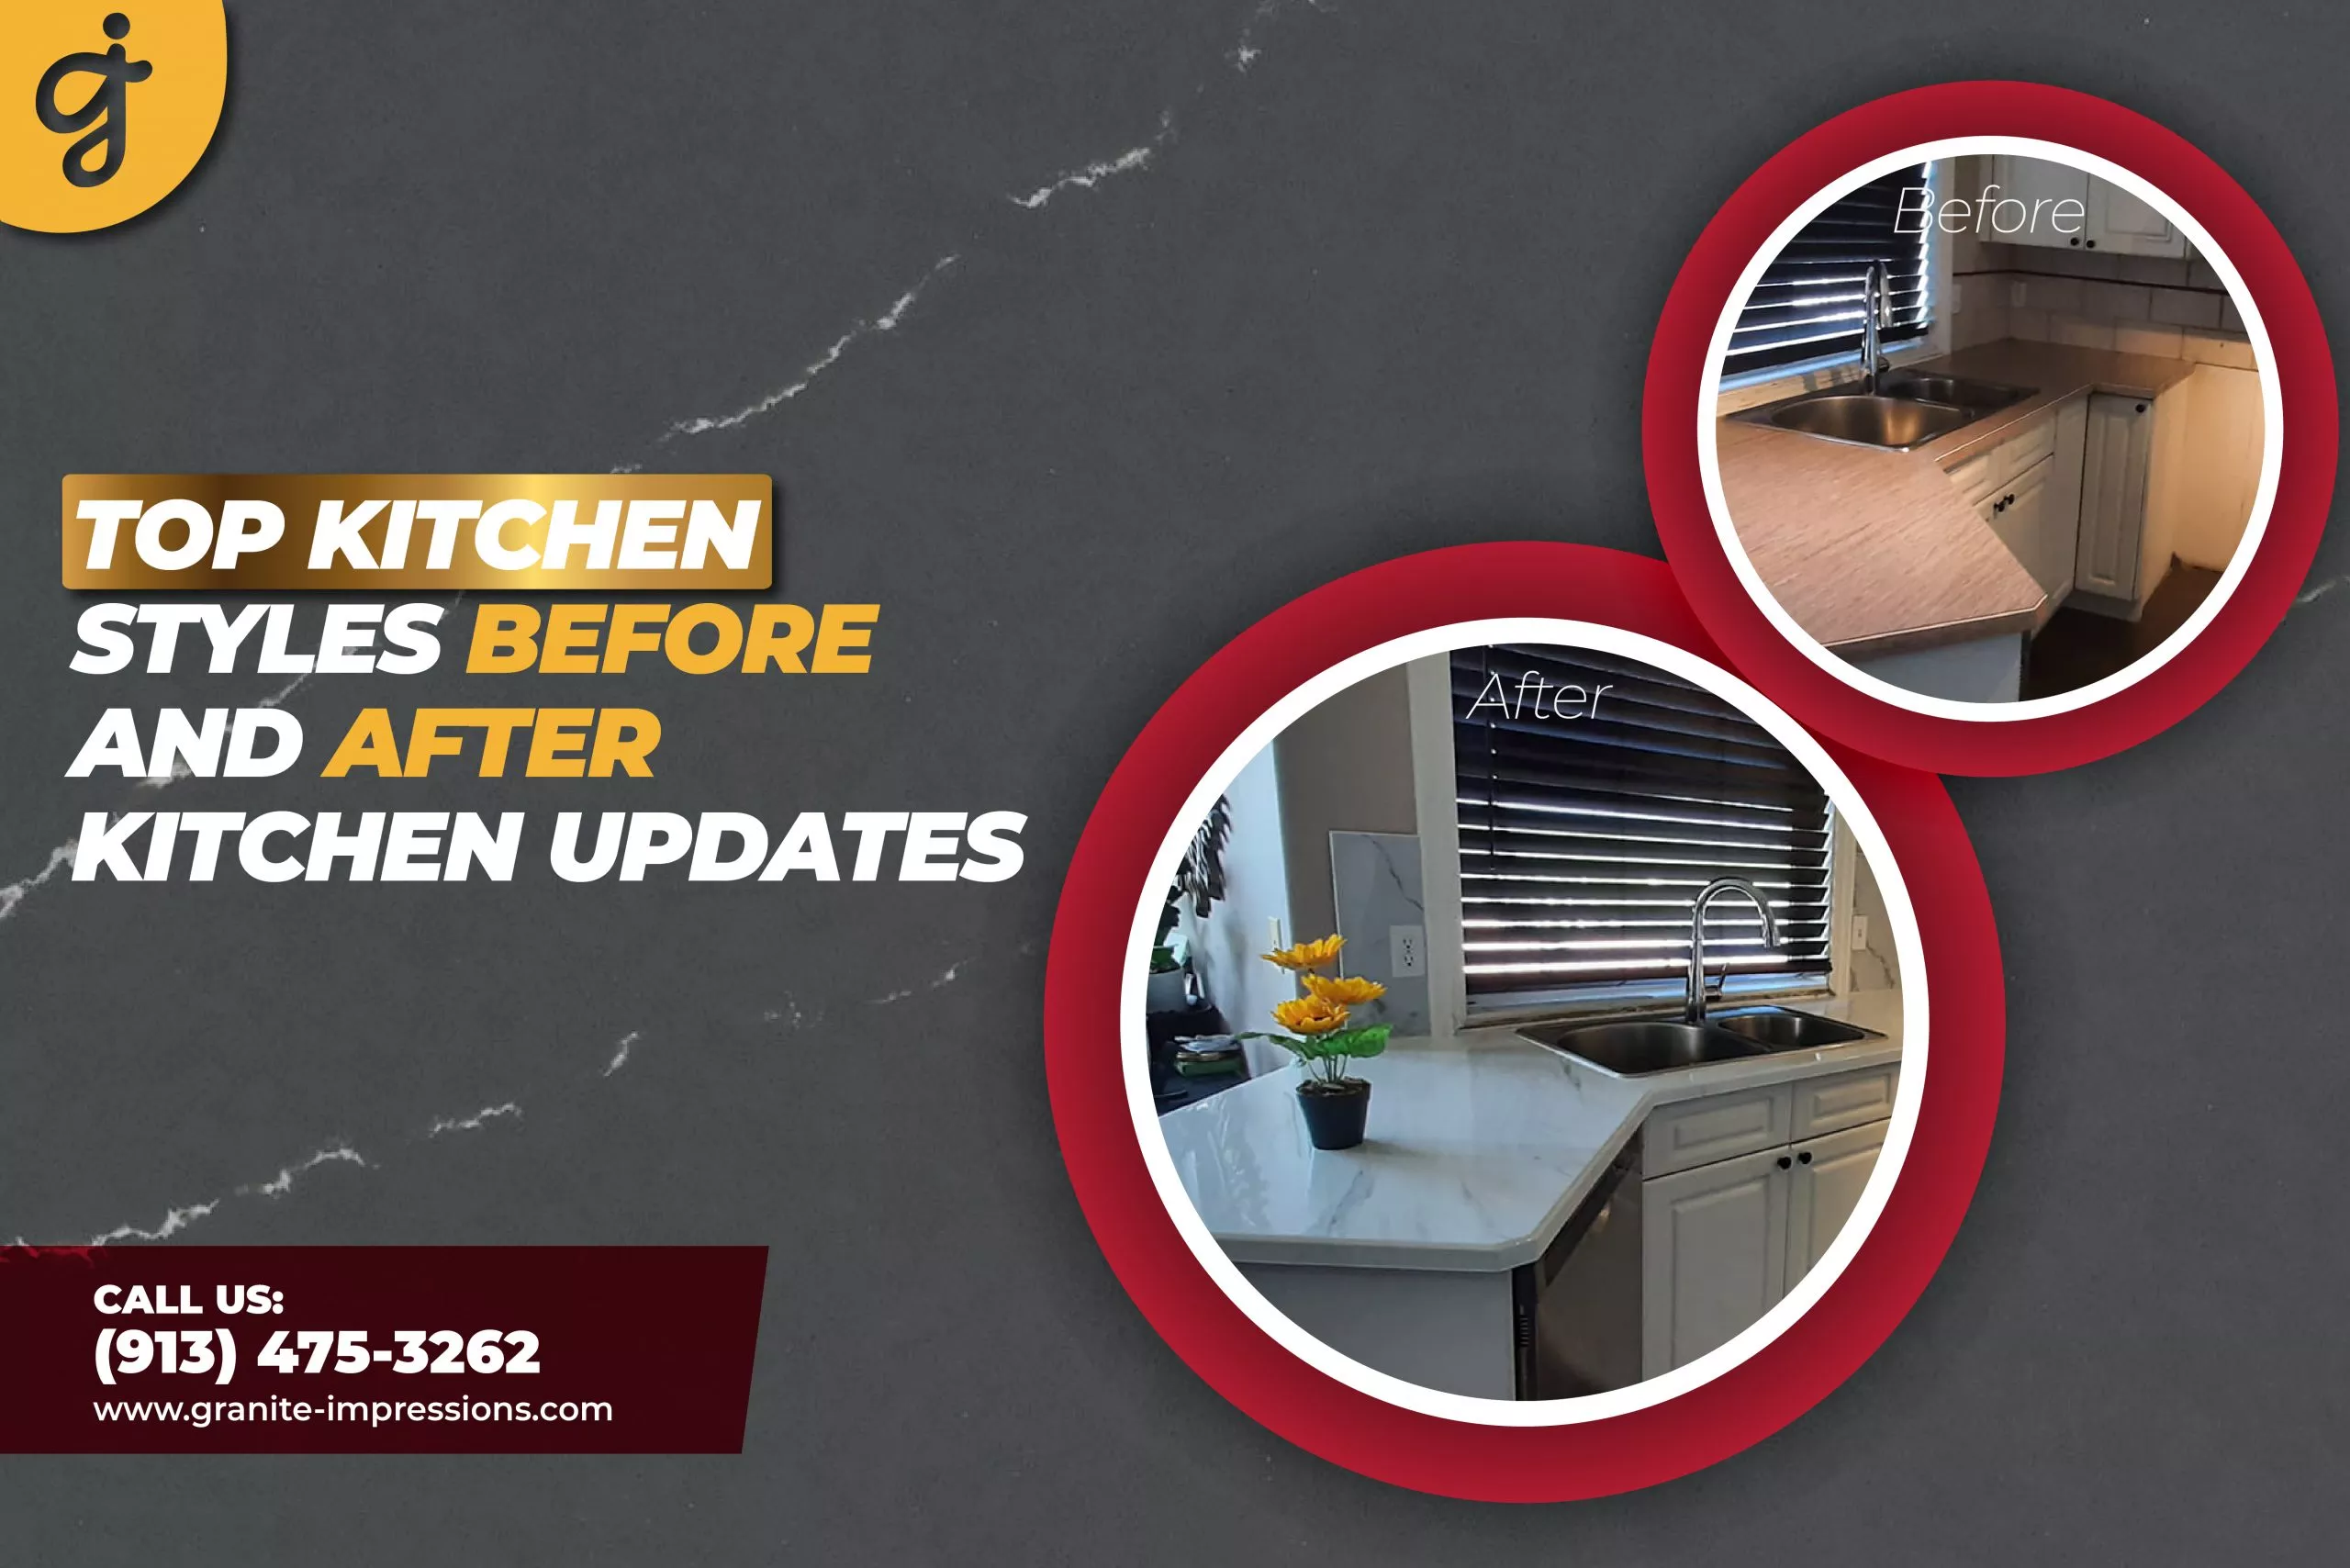 Top Kitchen Styles before & after kitchen updates | GRANITE IMPRESSIONS